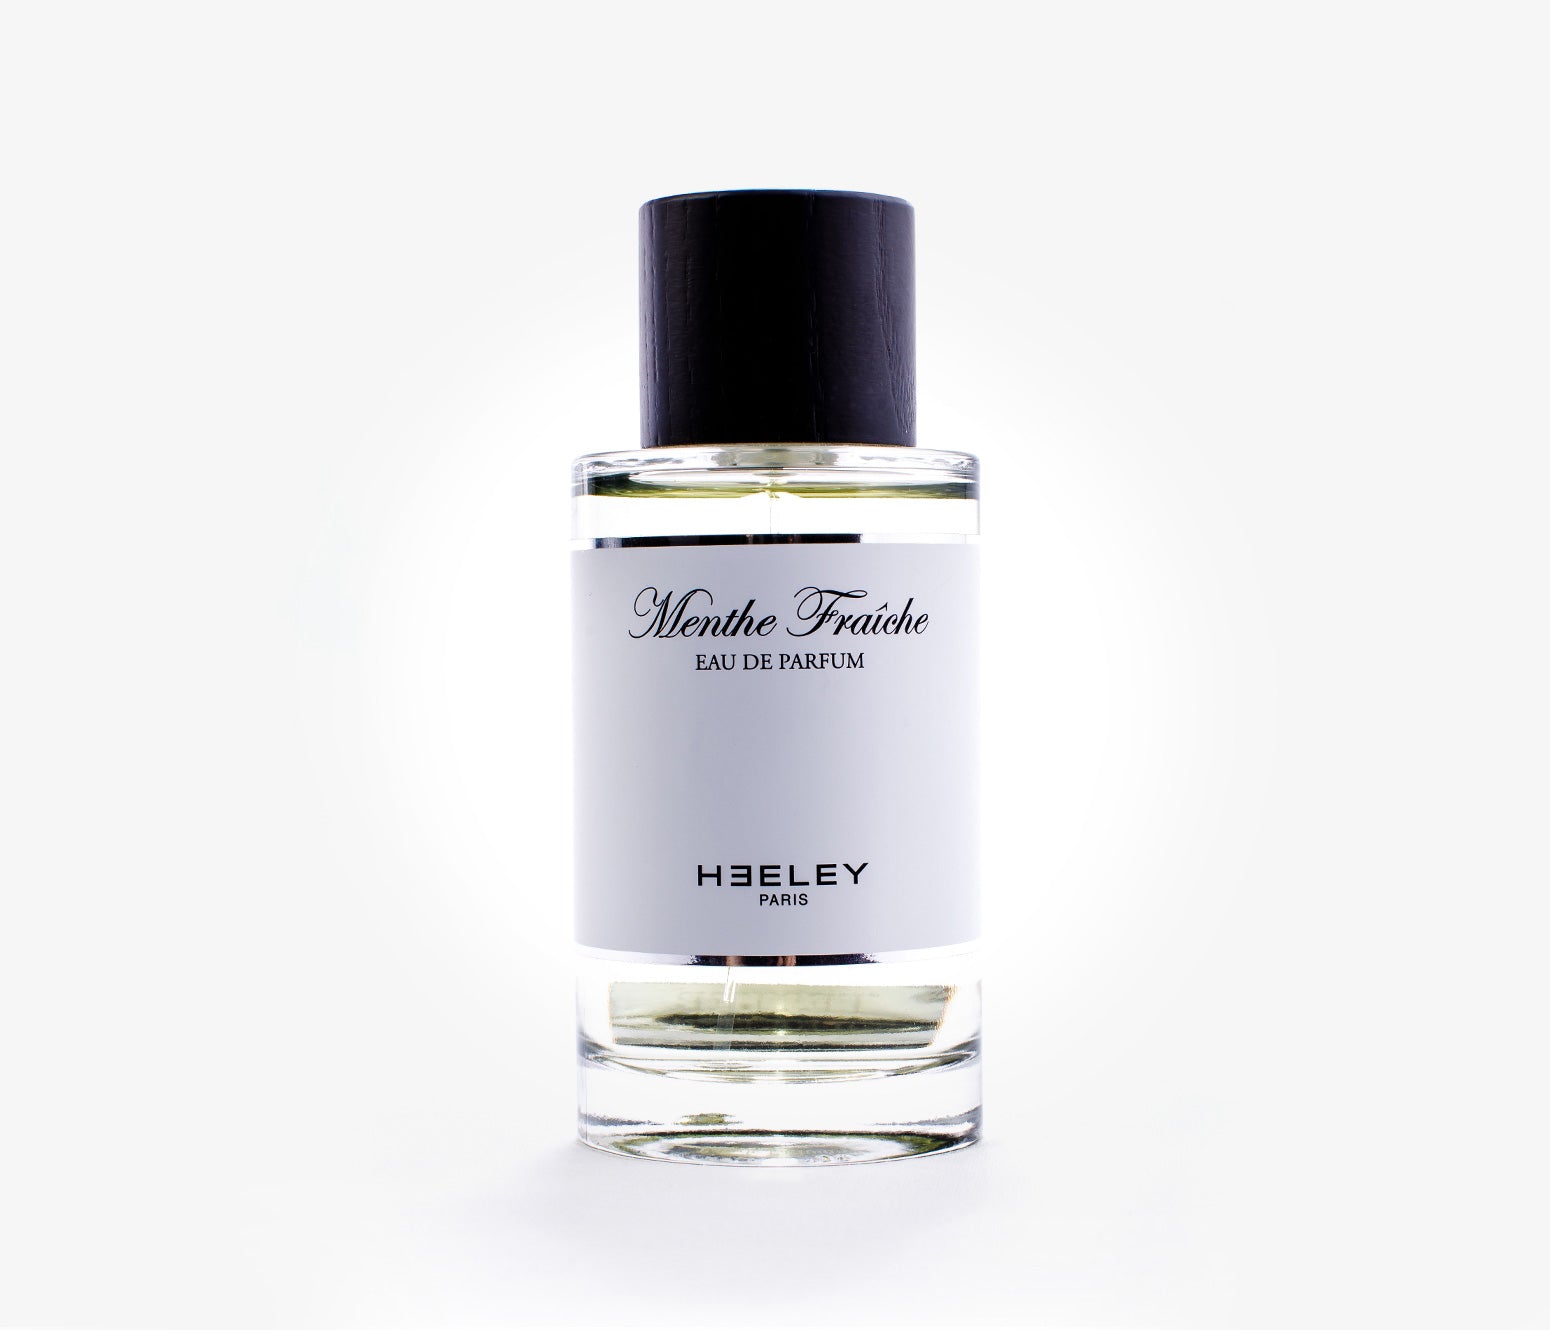 Heeley - Menthe Fraiche - 100ml - FTR7779 - Product Image - Fragrance - Les Senteurs